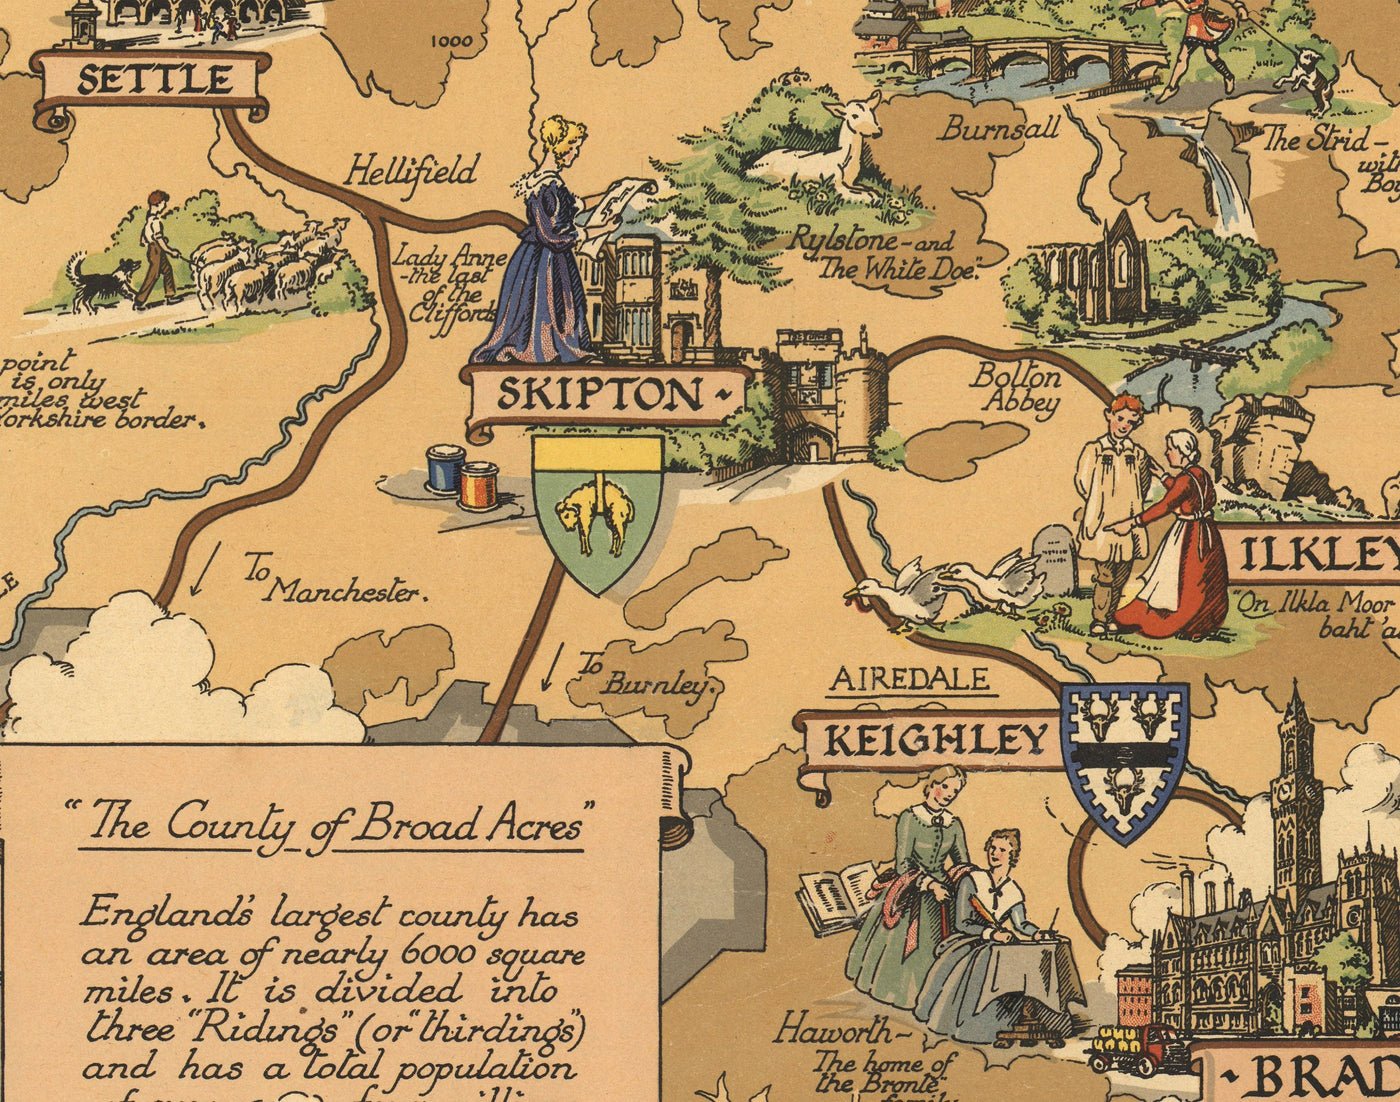 Old Map of Yorkshire, 1949-British Railway Pictorial Chart-York, Sheffield, Bradford, Leeds, Middlesbrough, Pennines